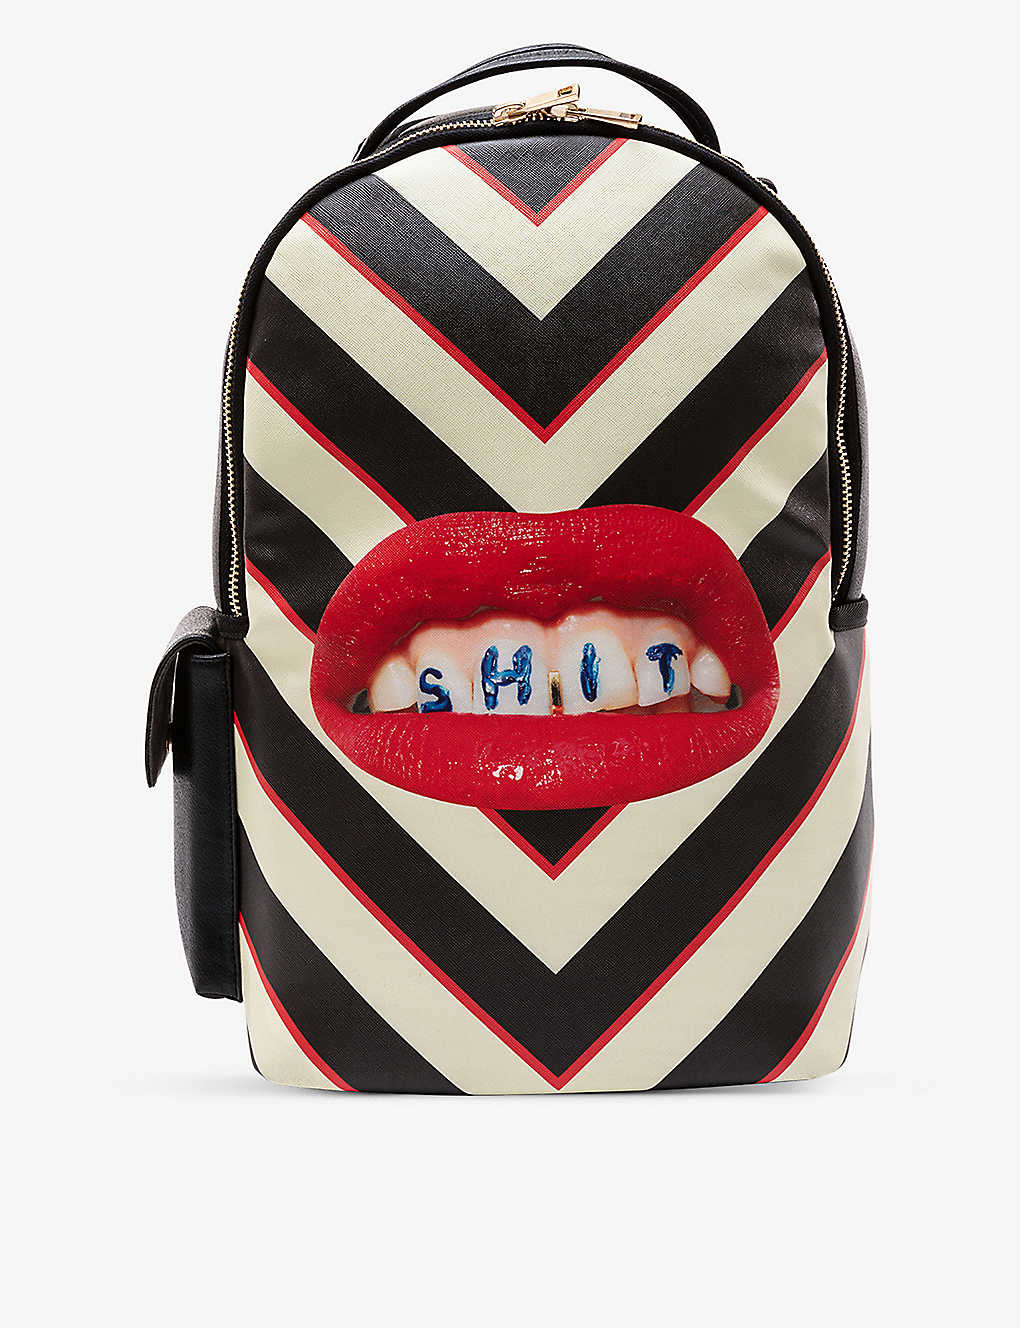 Seletti Wears Toiletpaper Lipstick-print Striped Faux-leather Backpack In White/black